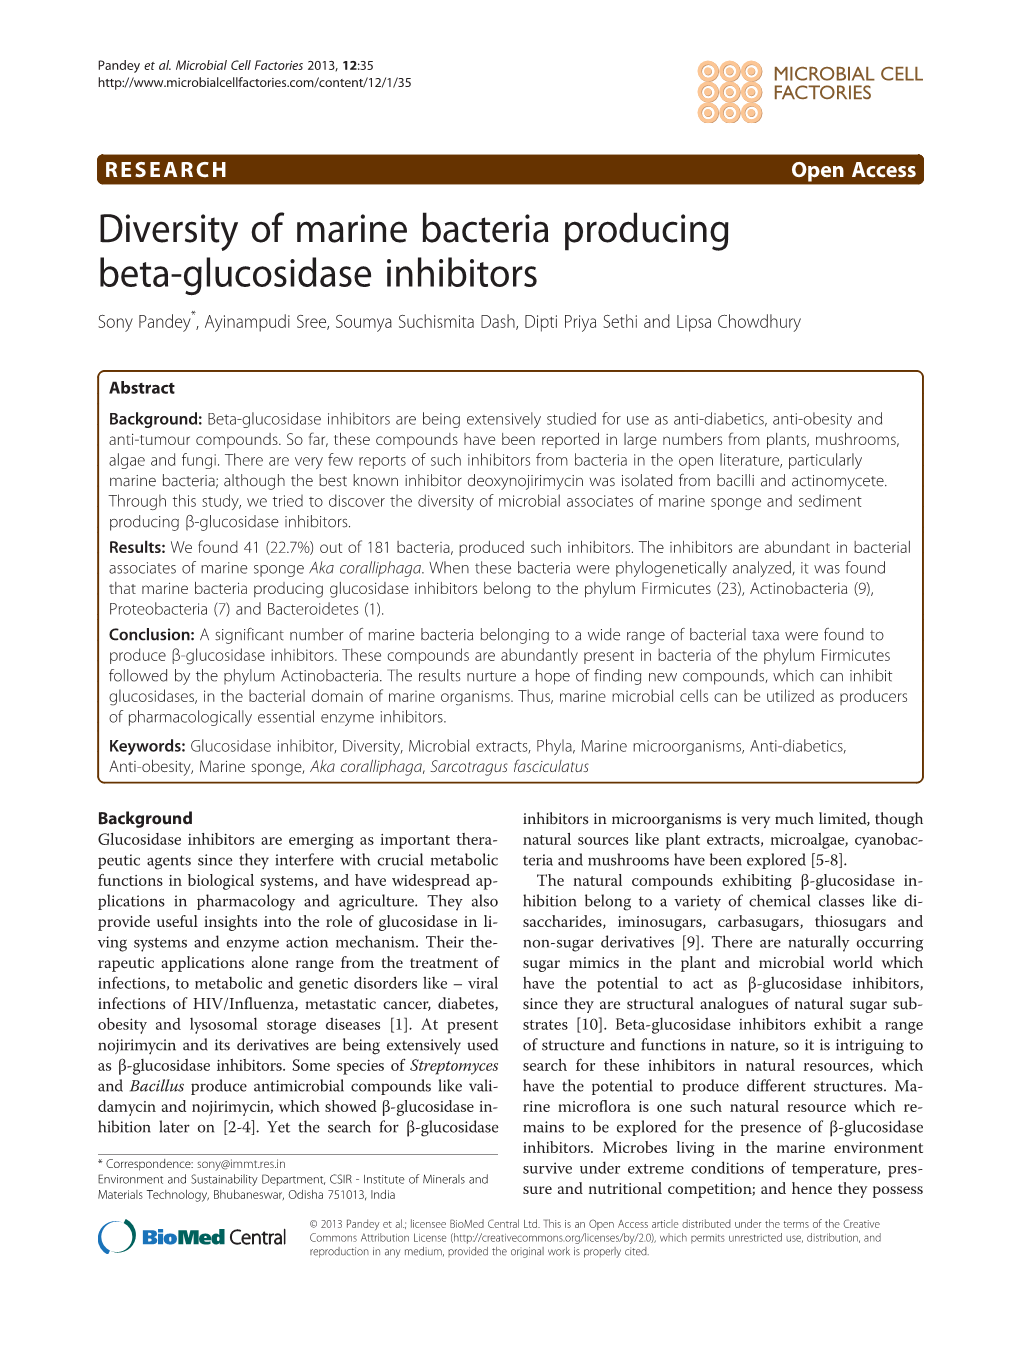 Diversity of Marine Bacteria Producing Beta-Glucosidase Inhibitors Sony Pandey*, Ayinampudi Sree, Soumya Suchismita Dash, Dipti Priya Sethi and Lipsa Chowdhury